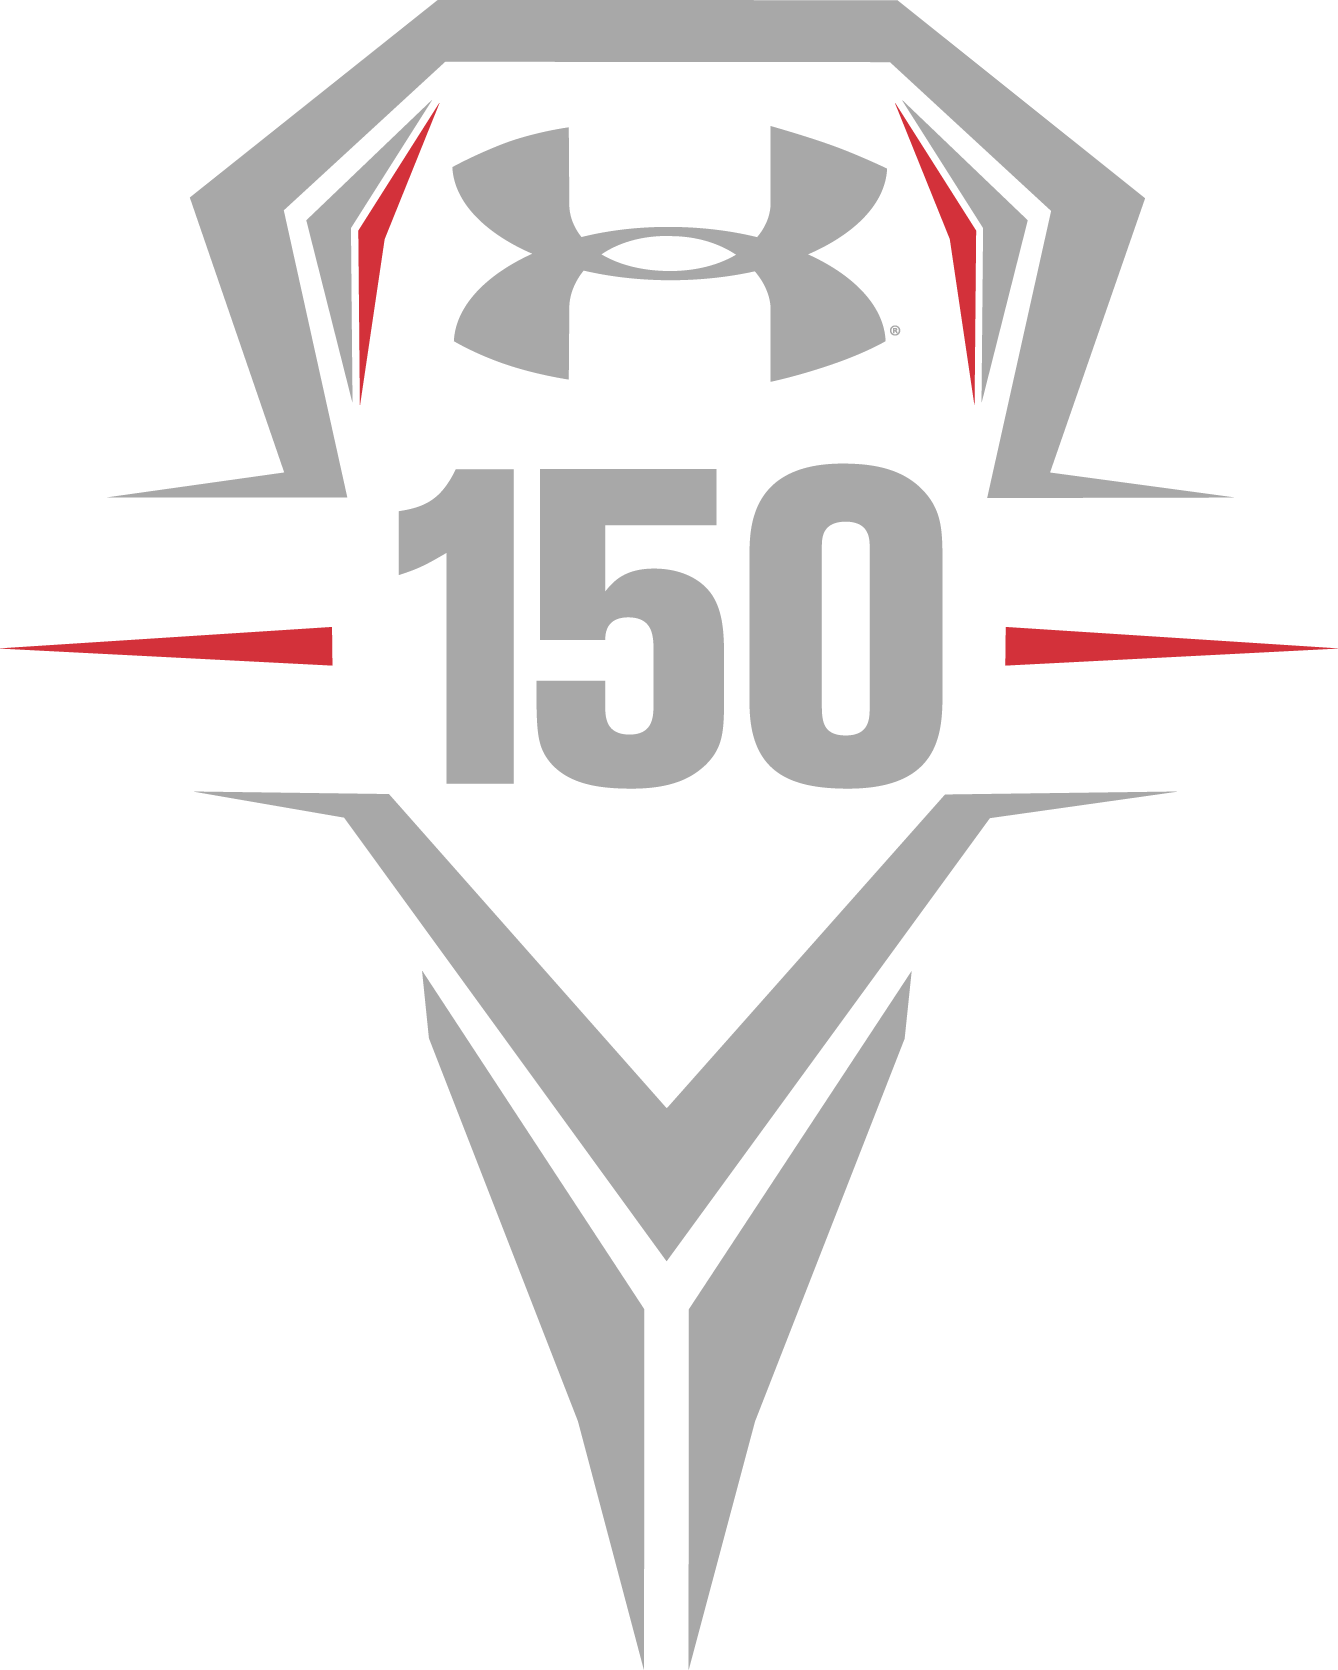 Under Armour Basketball Logo - Under Armour 150